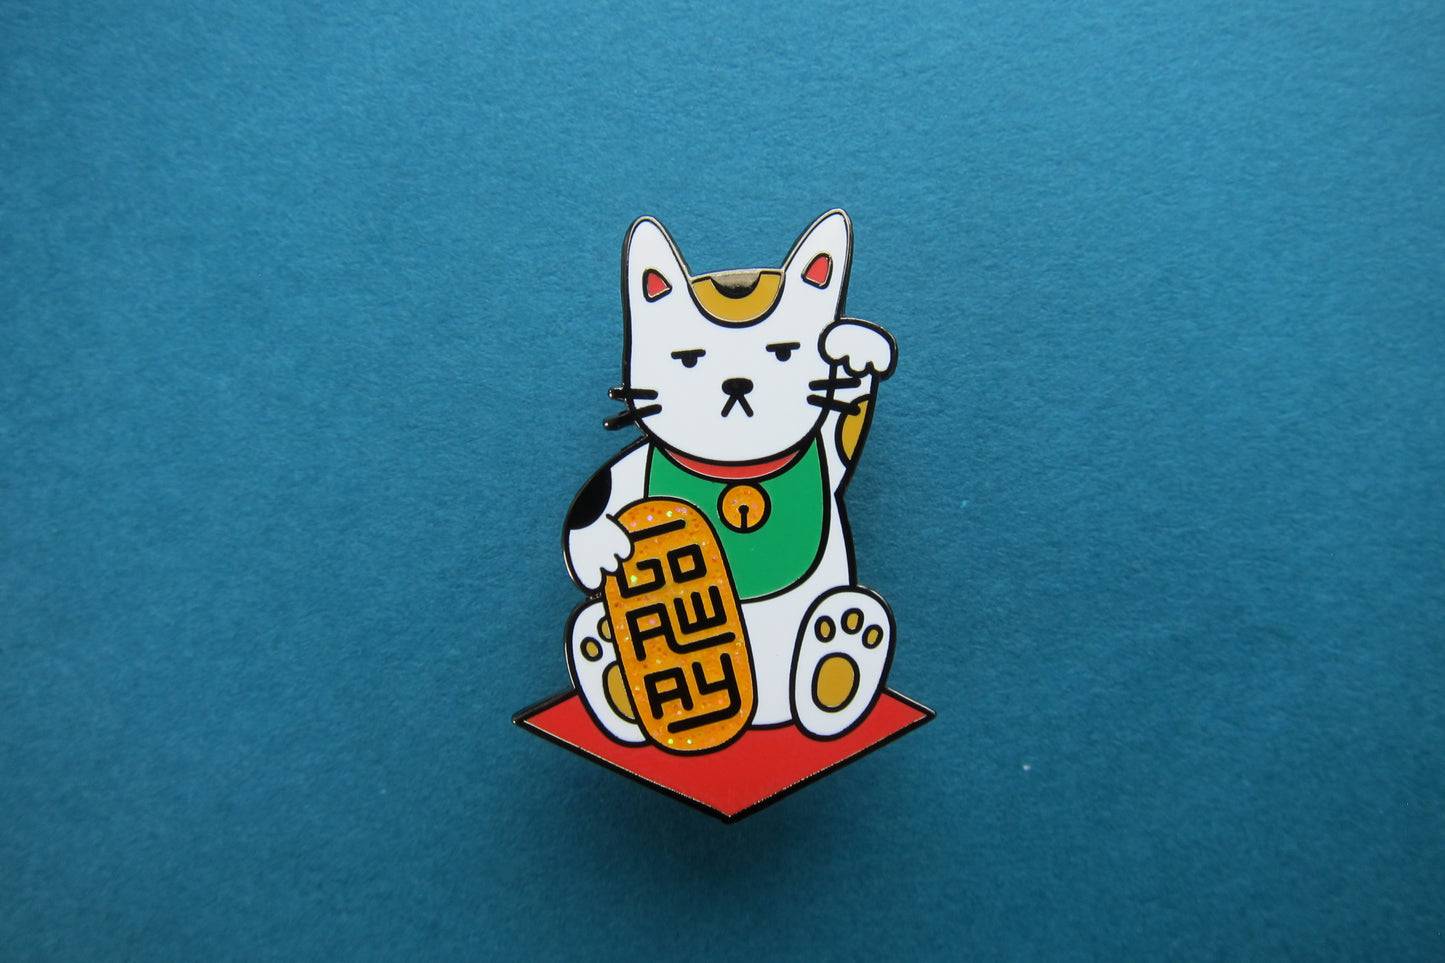 An enamel pin showing maneki neko cat holding a glittery gold bar that says "Go Away" over a teal background.